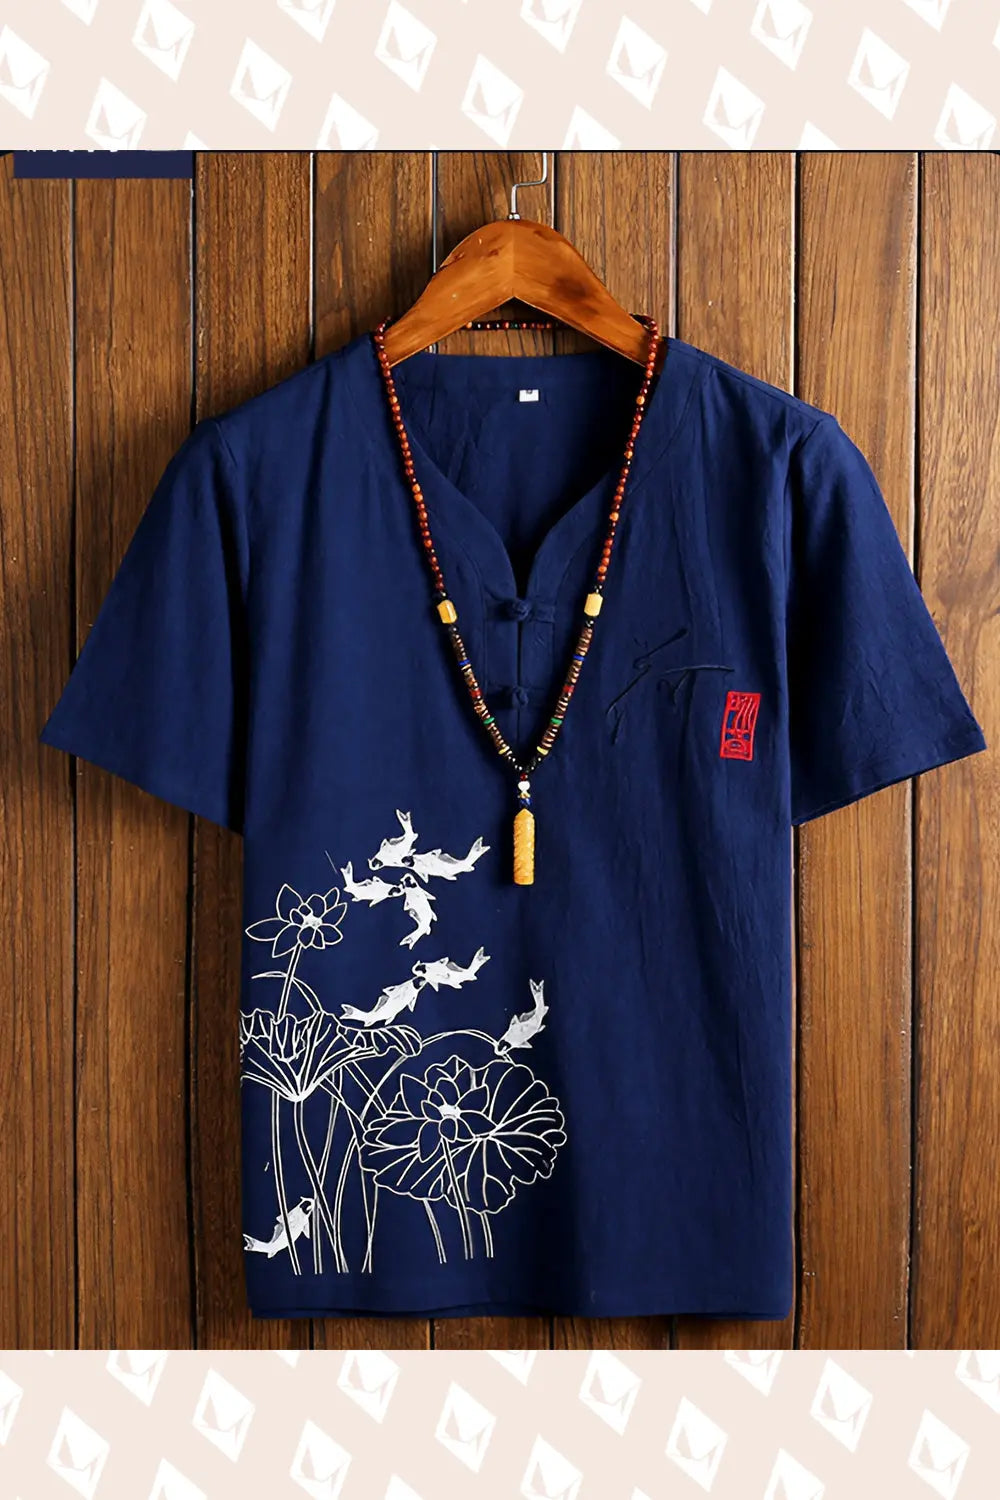 Koi Carp T-Shirt - Navy Blue - Strange Clothes